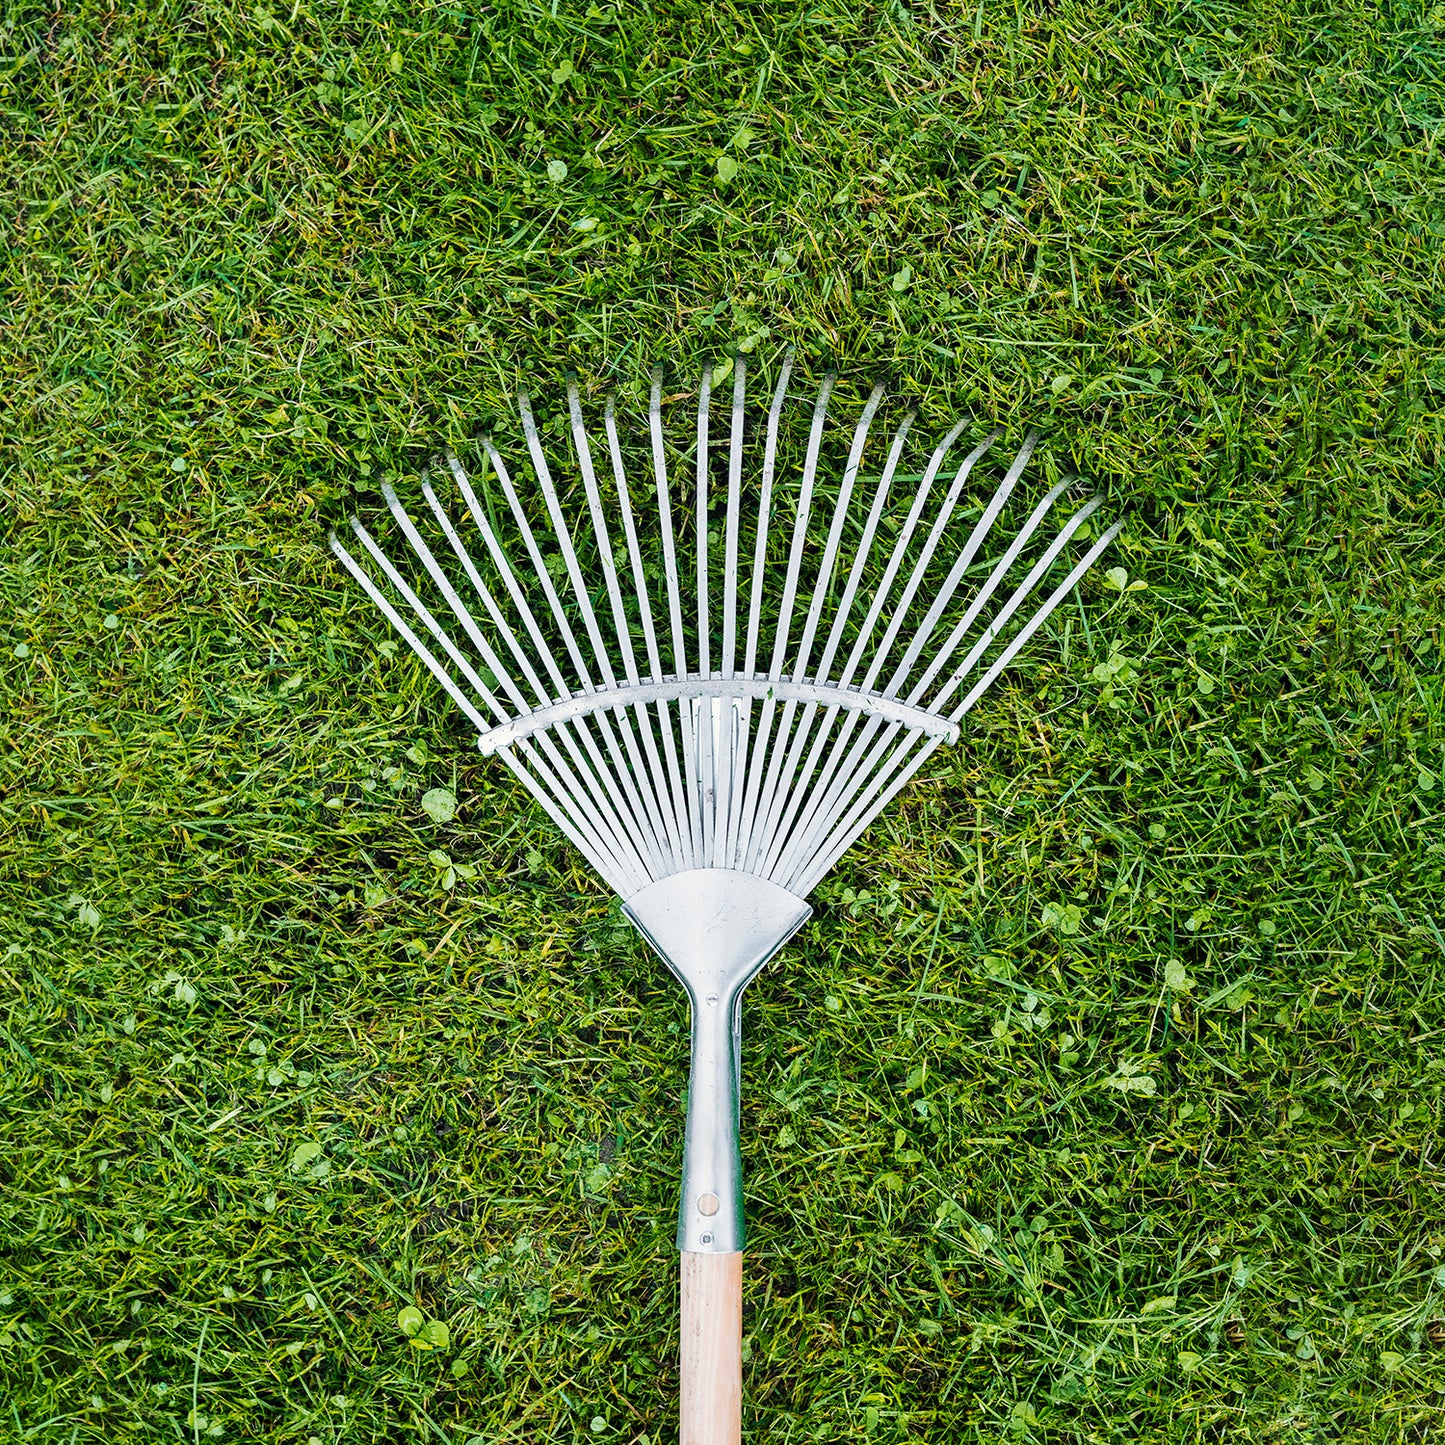 Rastrillo Metalico Para Jardin Ancho Regulable 31,5 A 43,5 cm. rastrillo Hojas, Cepillo Jardin, Escoba Metalica, Escoba Jardin